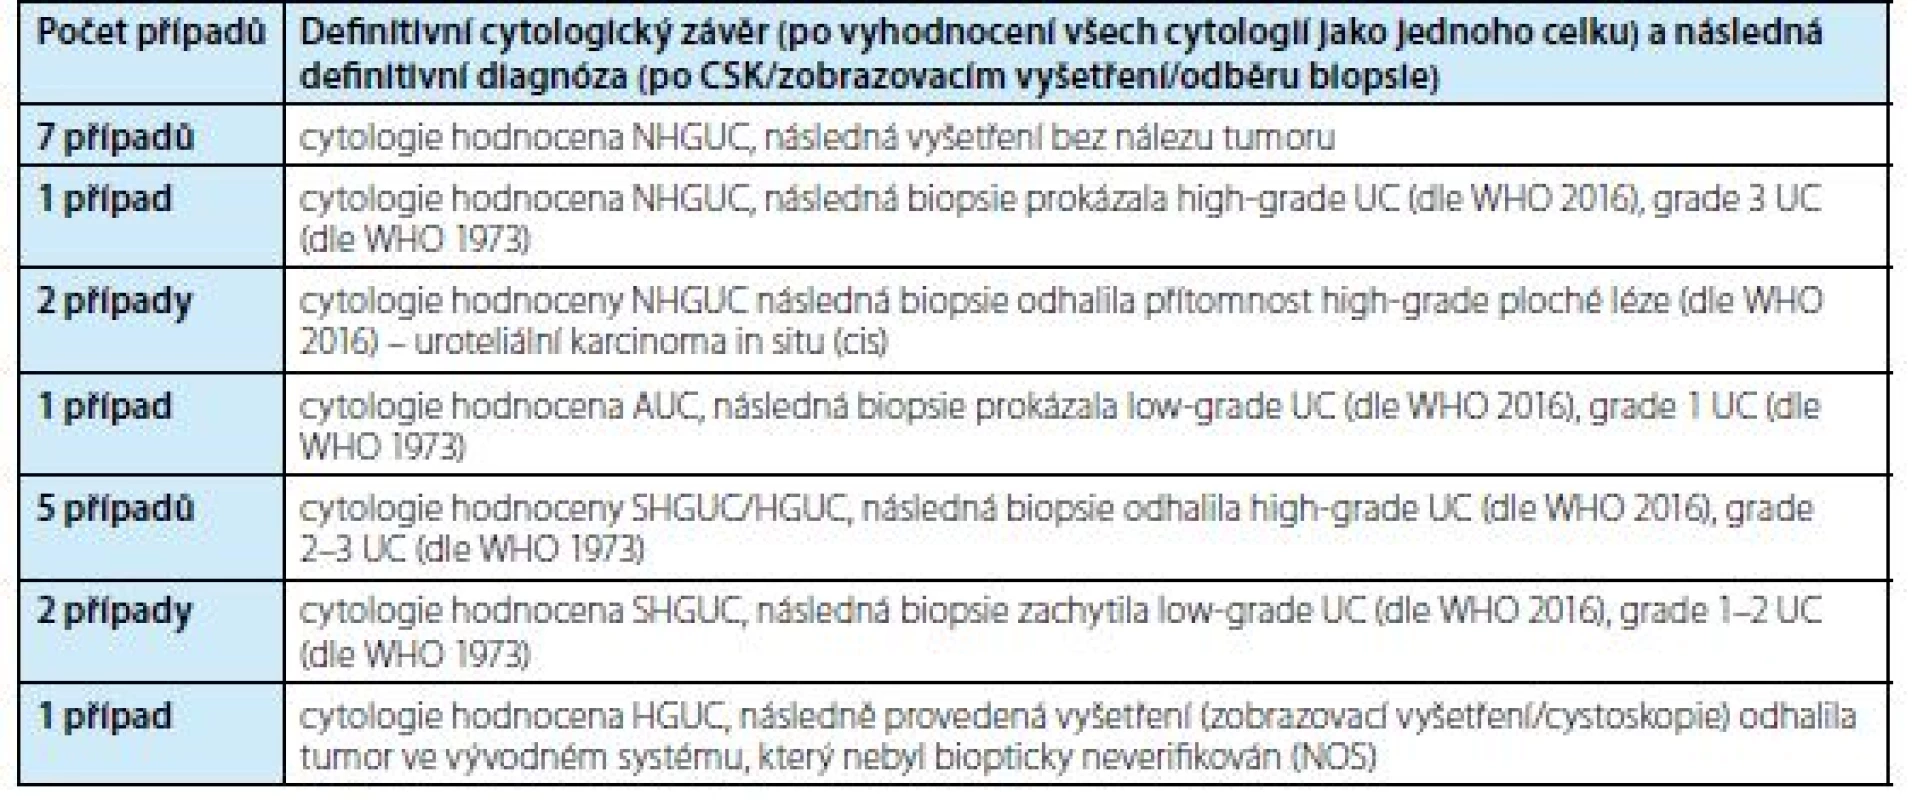 Pacienti s dvěma cytologiemi v jednom časovém období – 19 vyšetření (38 cytologií)<br>
Tab. 3. Patiens with two cytologies in one time period – 19 examinations (38 cytologies)